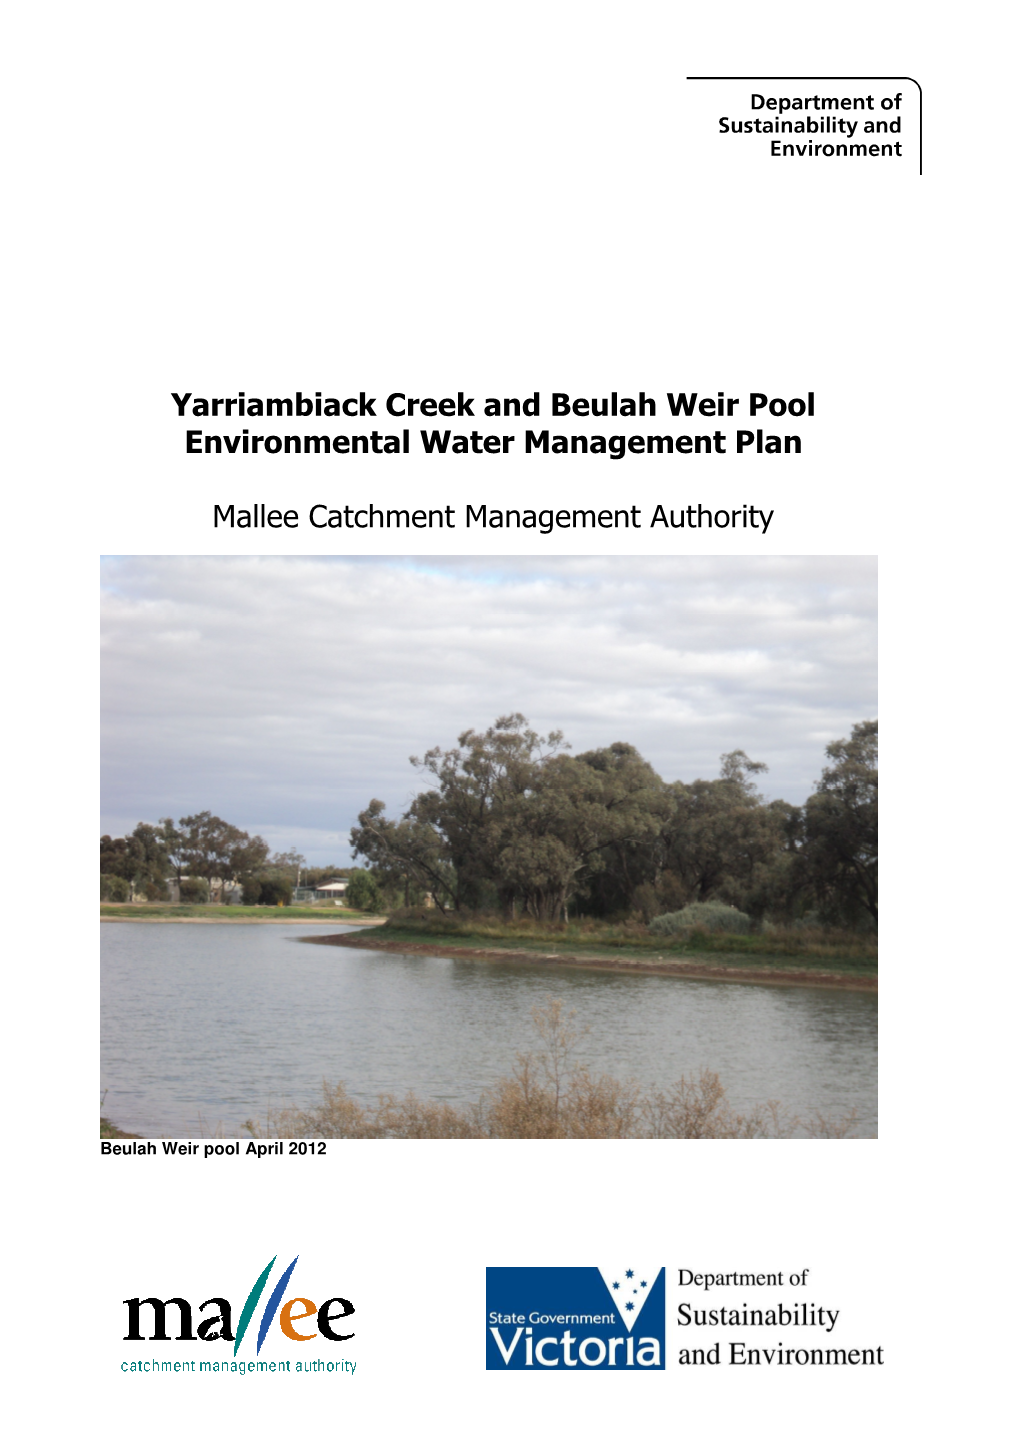 Yarriambiack Creek and Beulah Weir Pool Environmental Water Management Plan